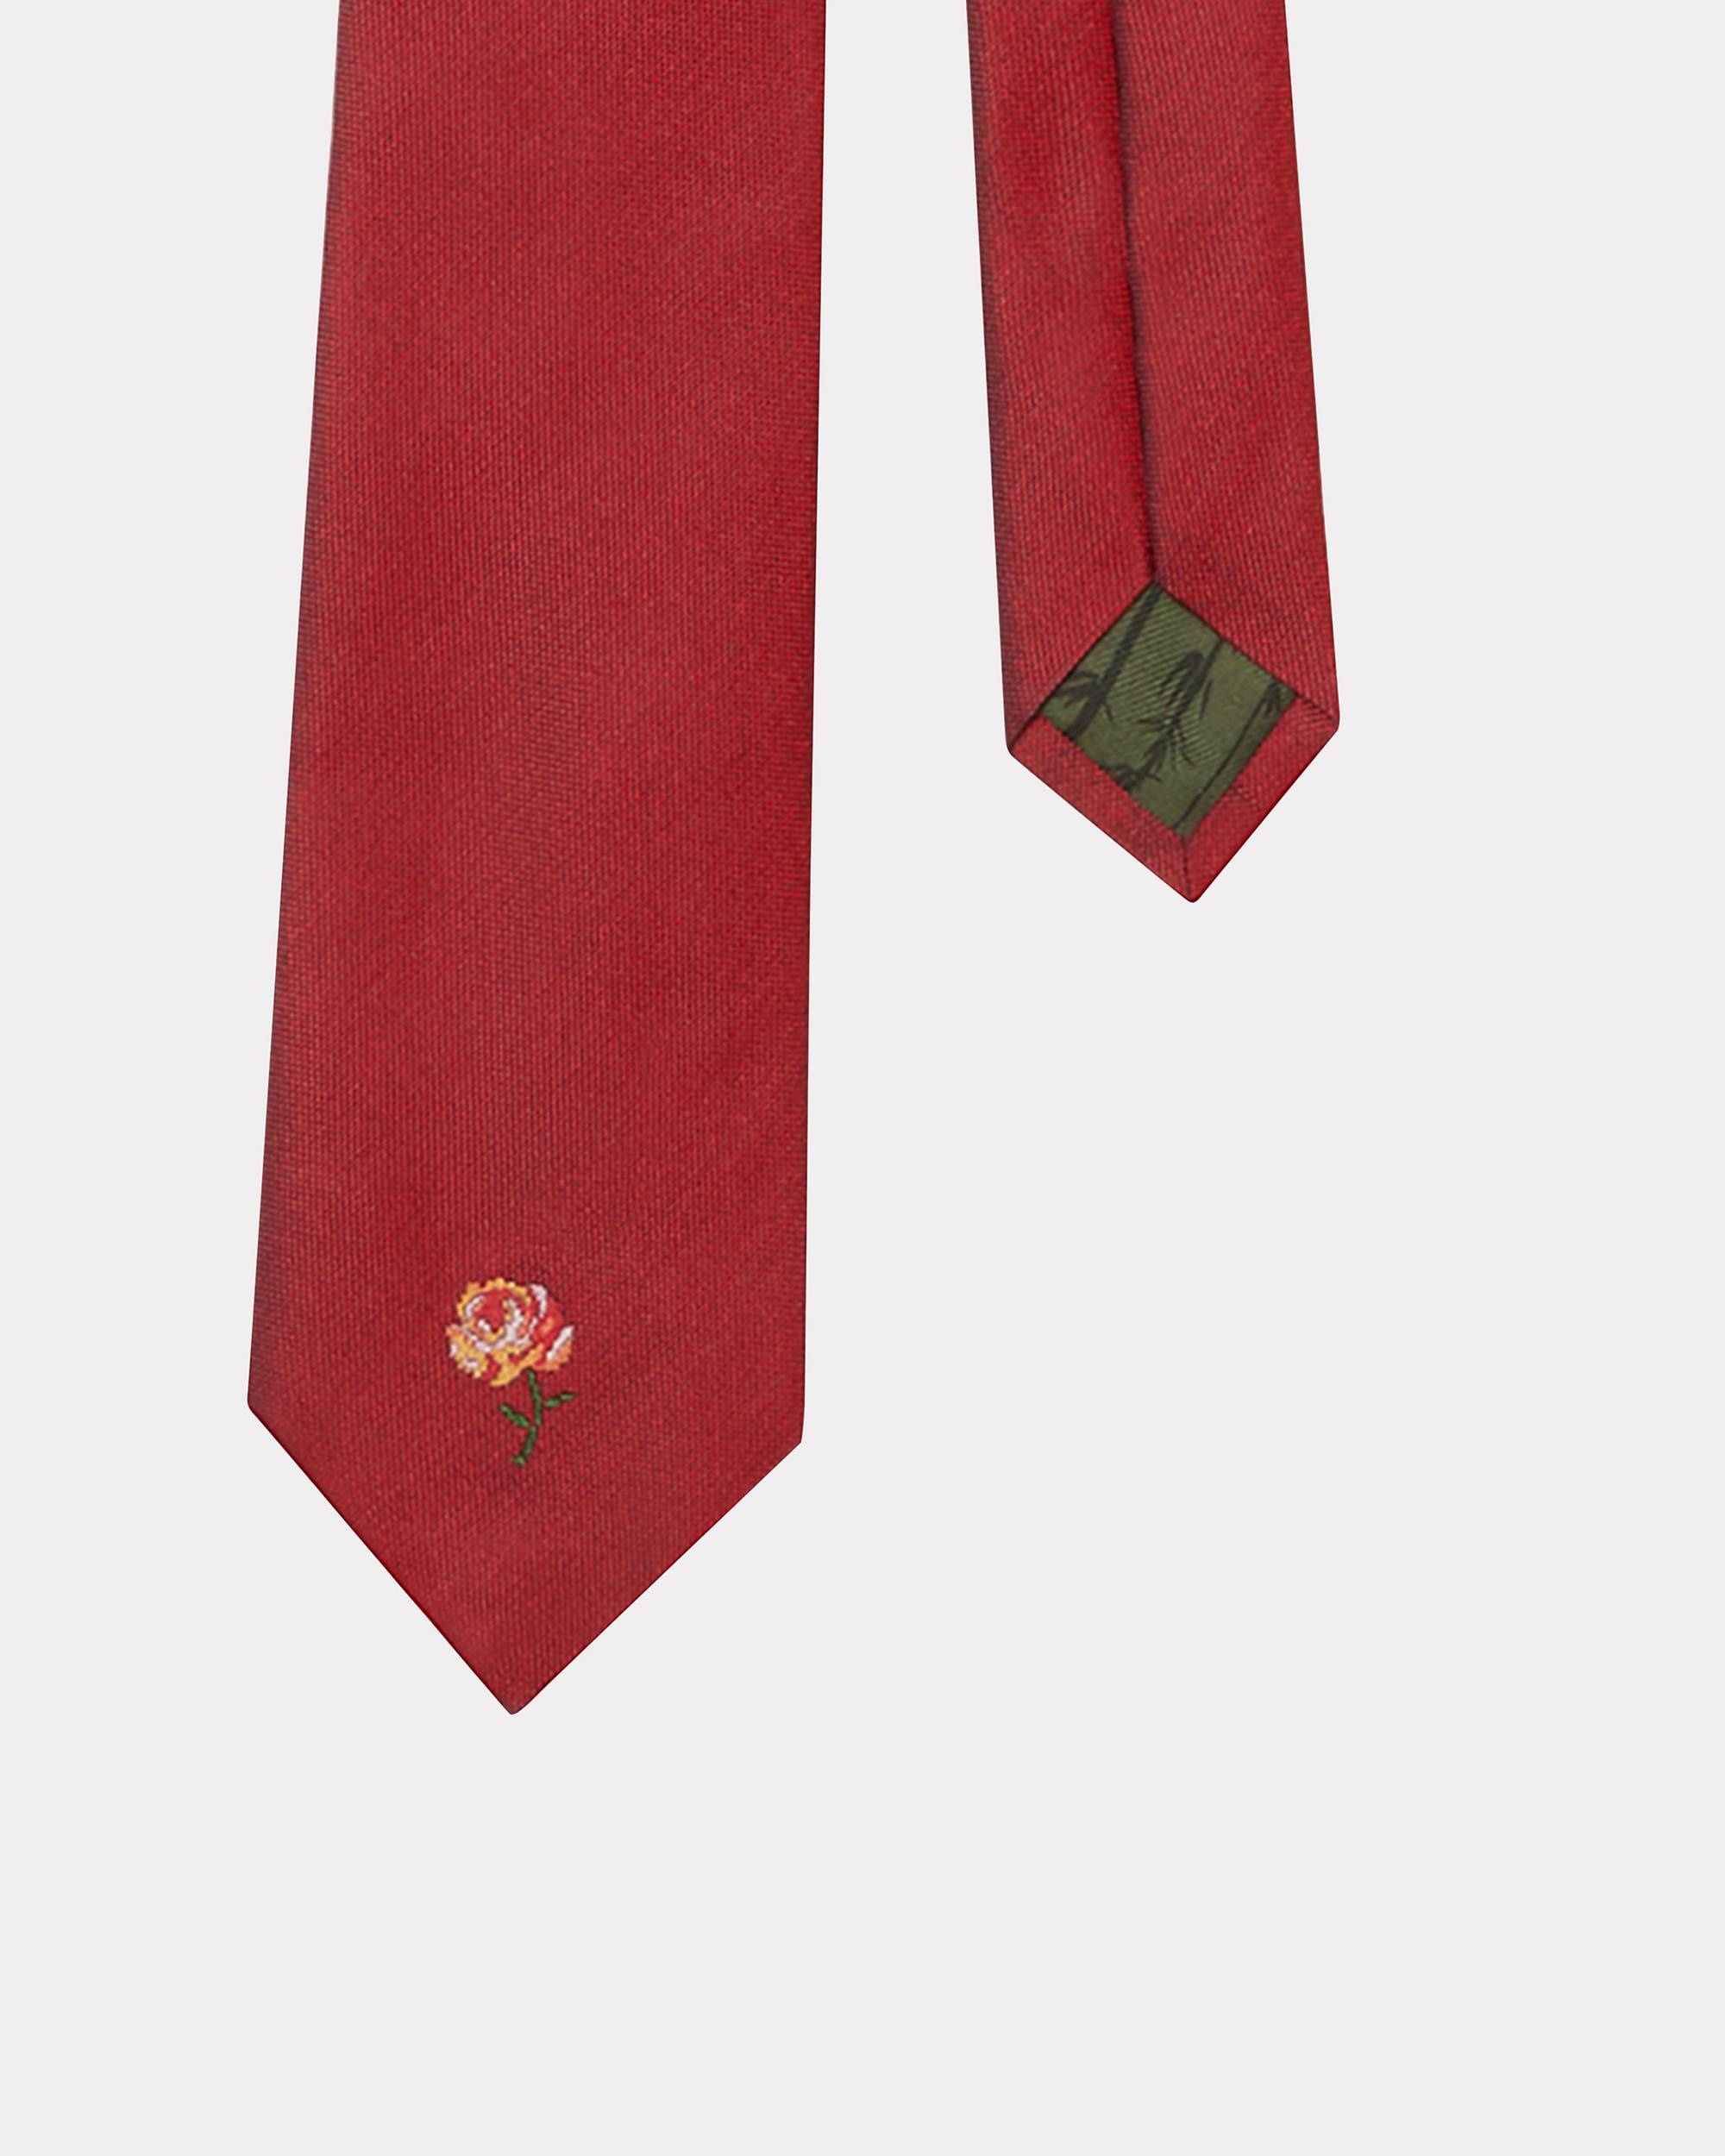 'Pixel Rose' silk tie - 2